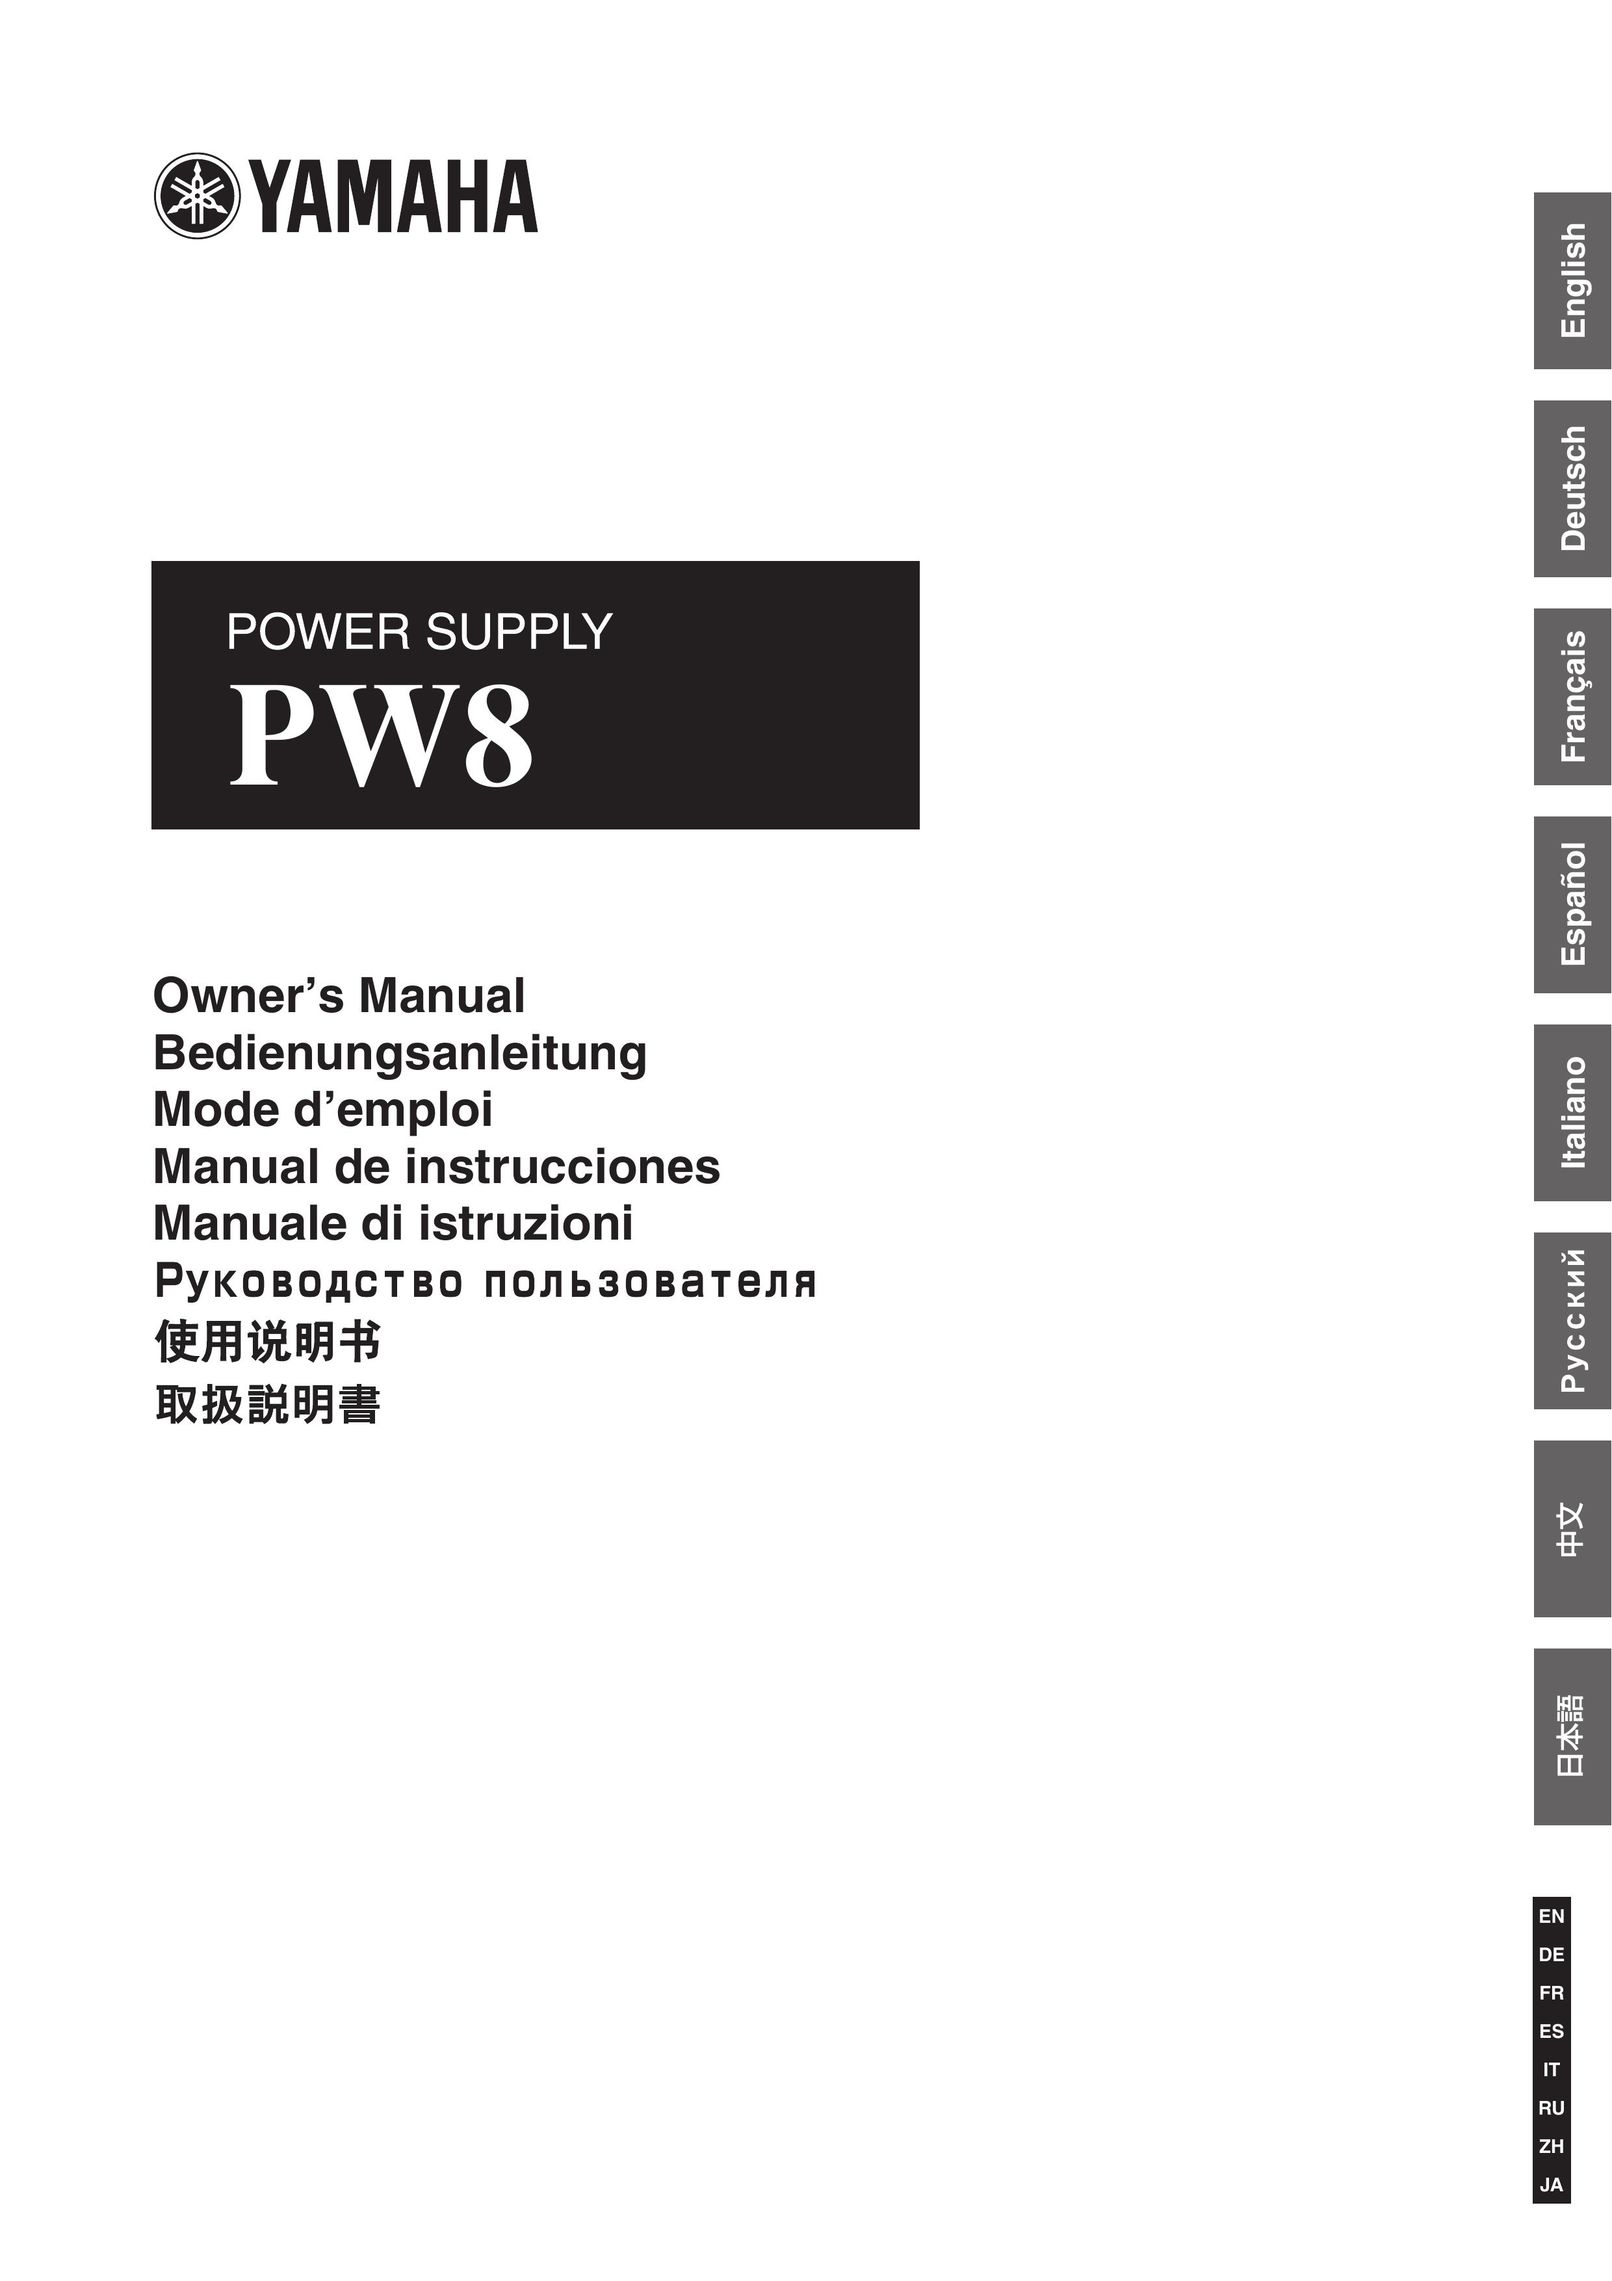 Yamaha PW8 Power Supply User Manual